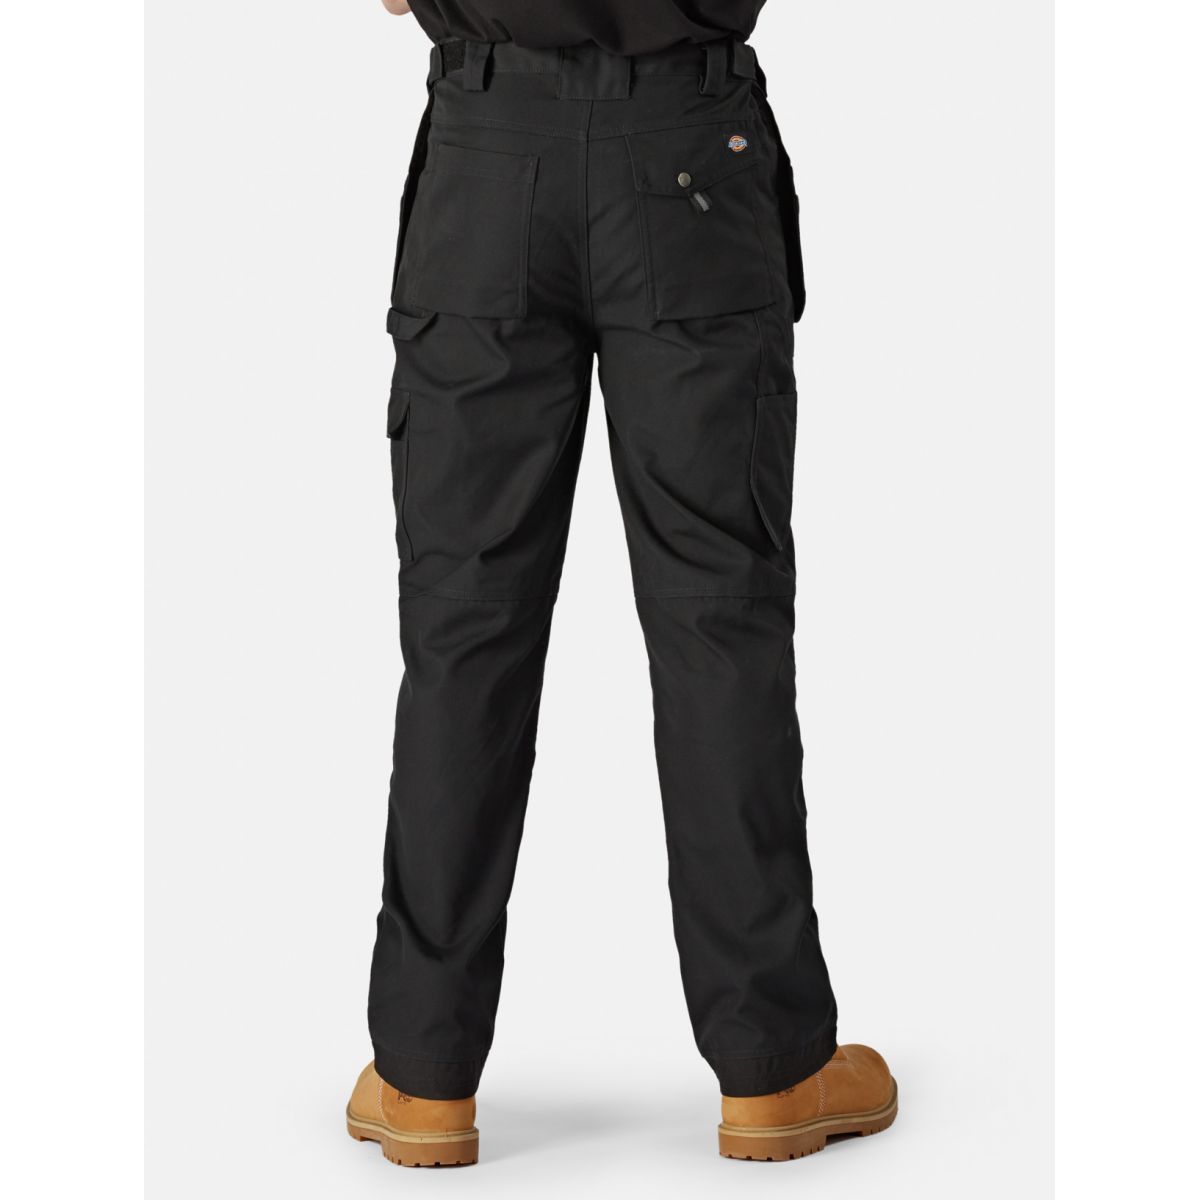 Pantalon Eisenhower multi-poches Noir - Dickies - Taille 40 1